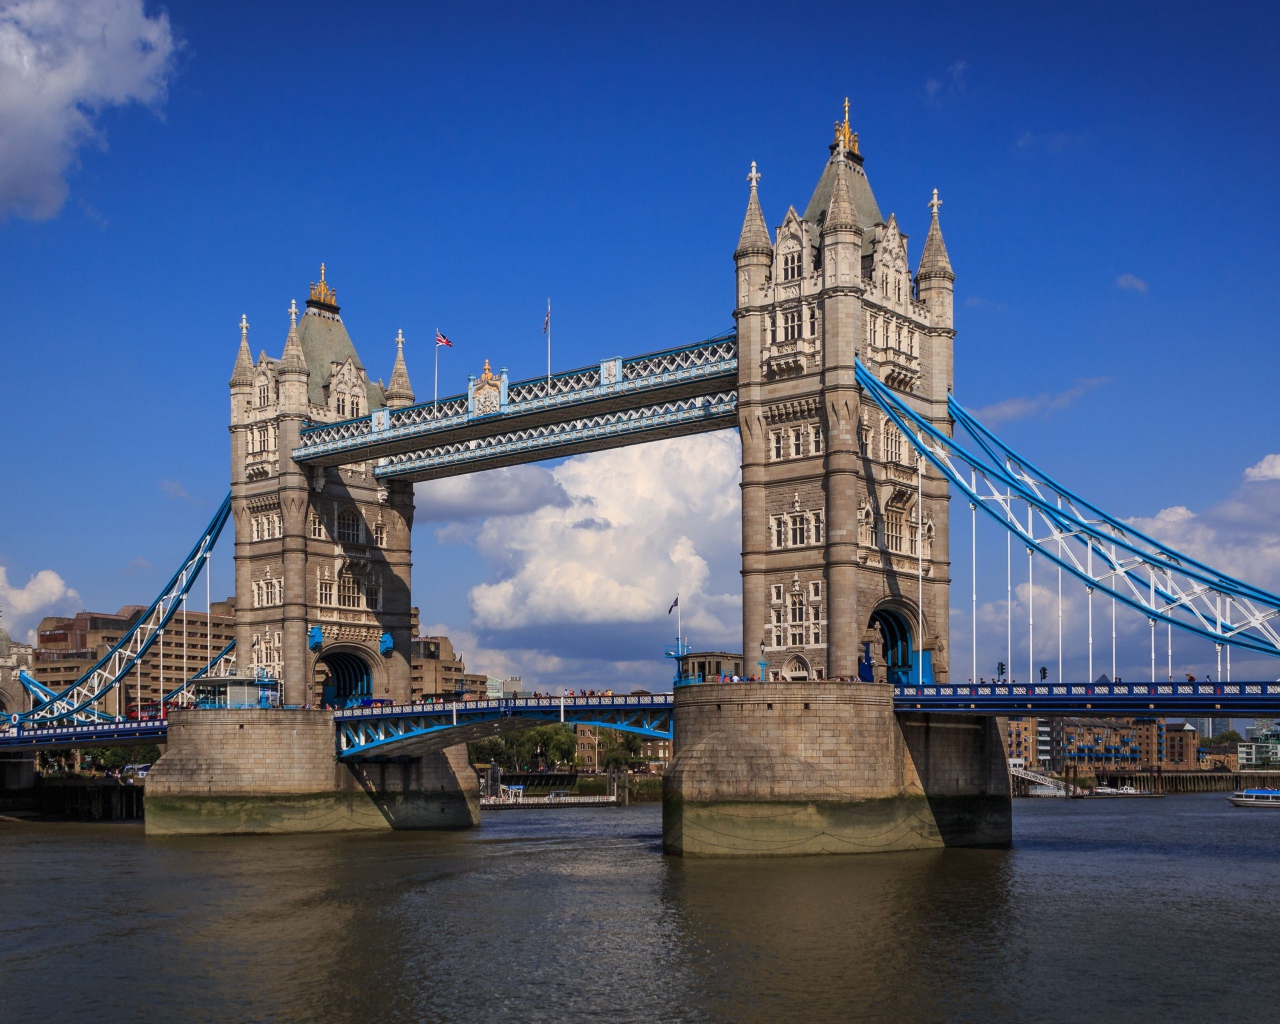 Beautiful Tower Bridge under the blue sky, London. Great Britain